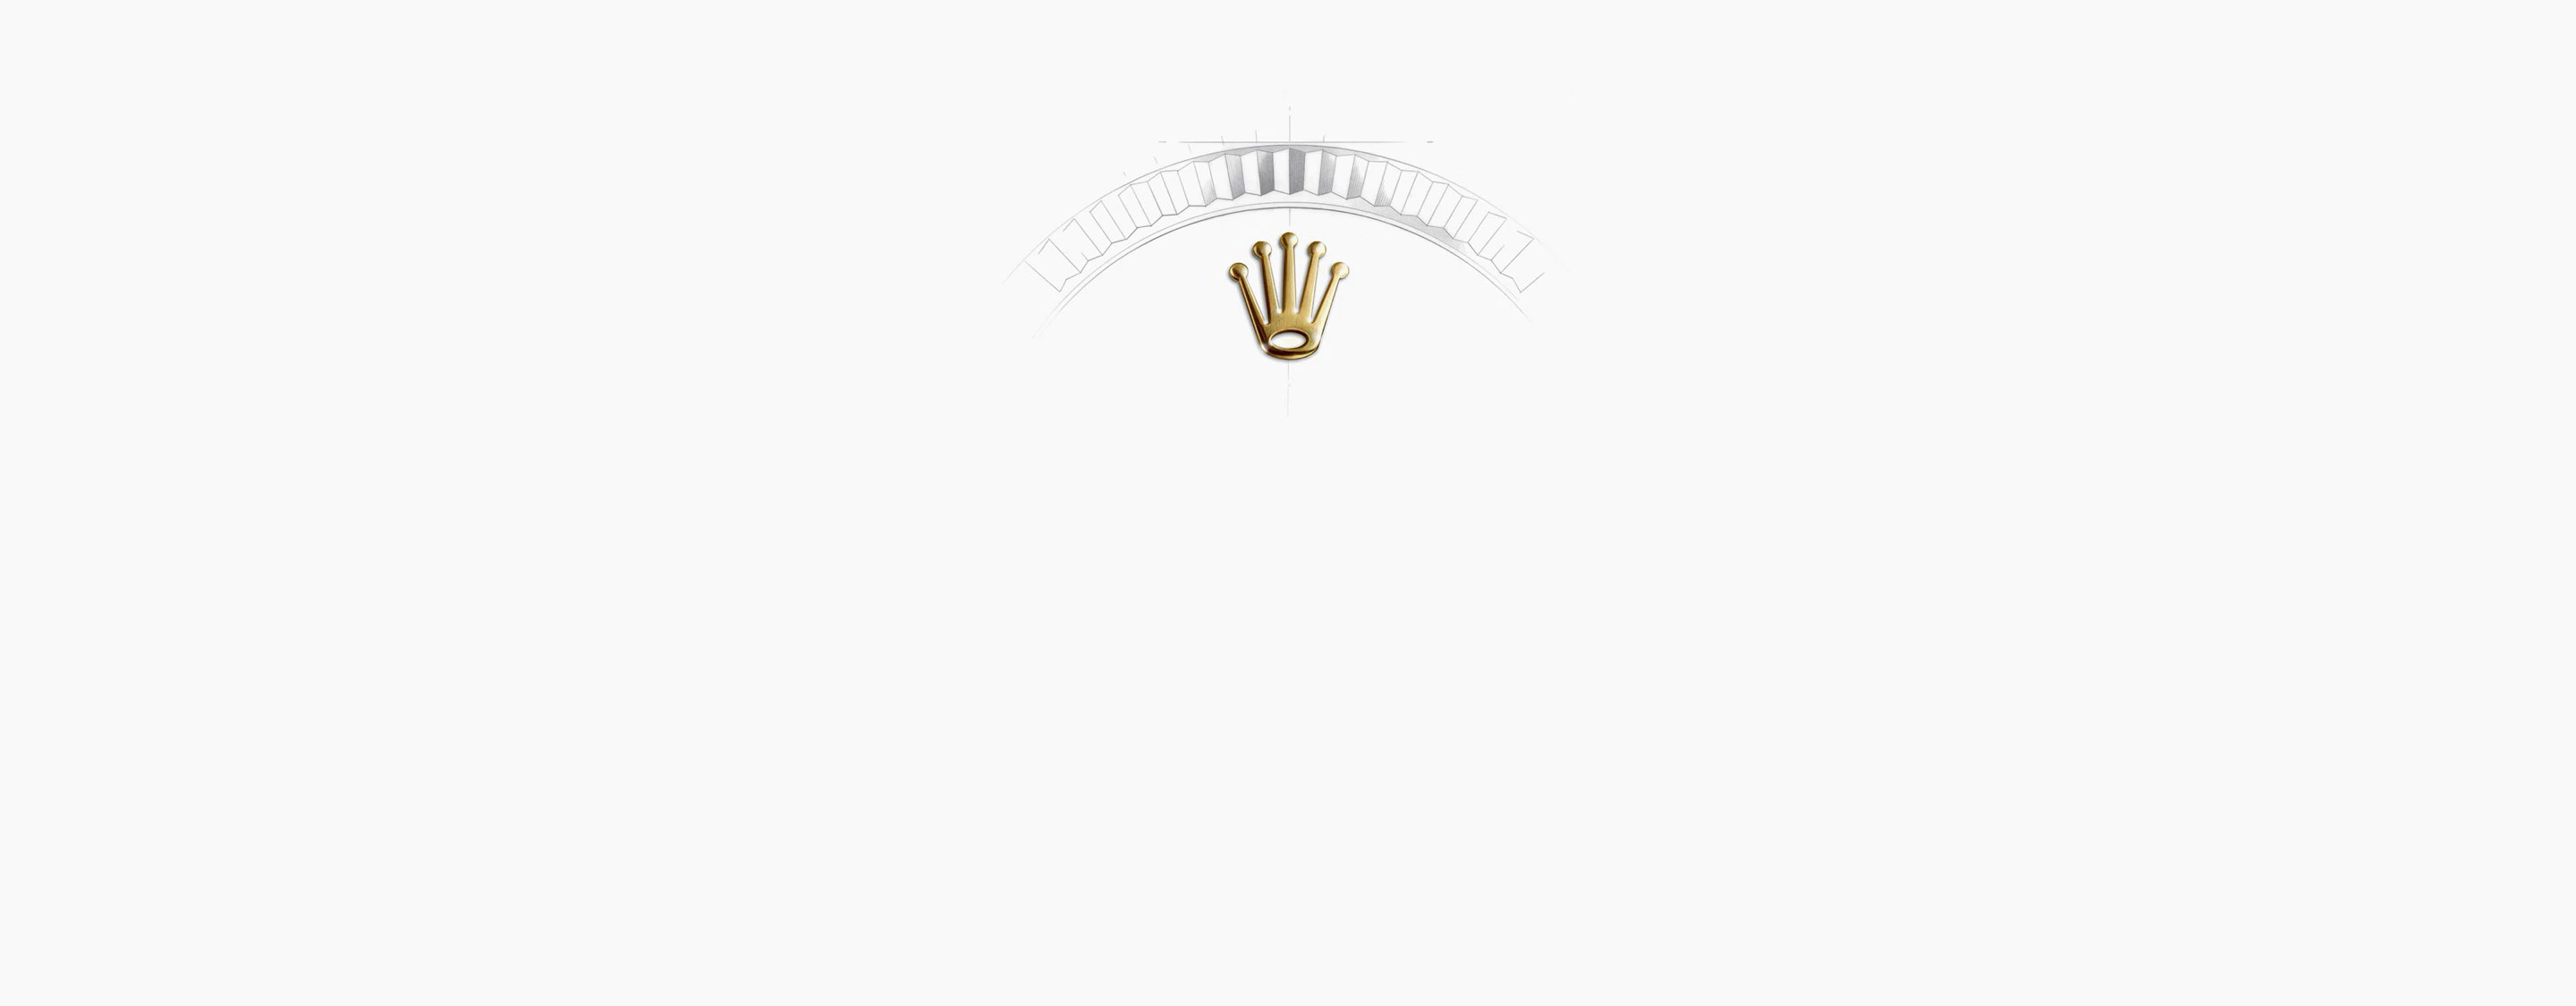 Corona Rolex Datejust 36 in Relojería Alemana